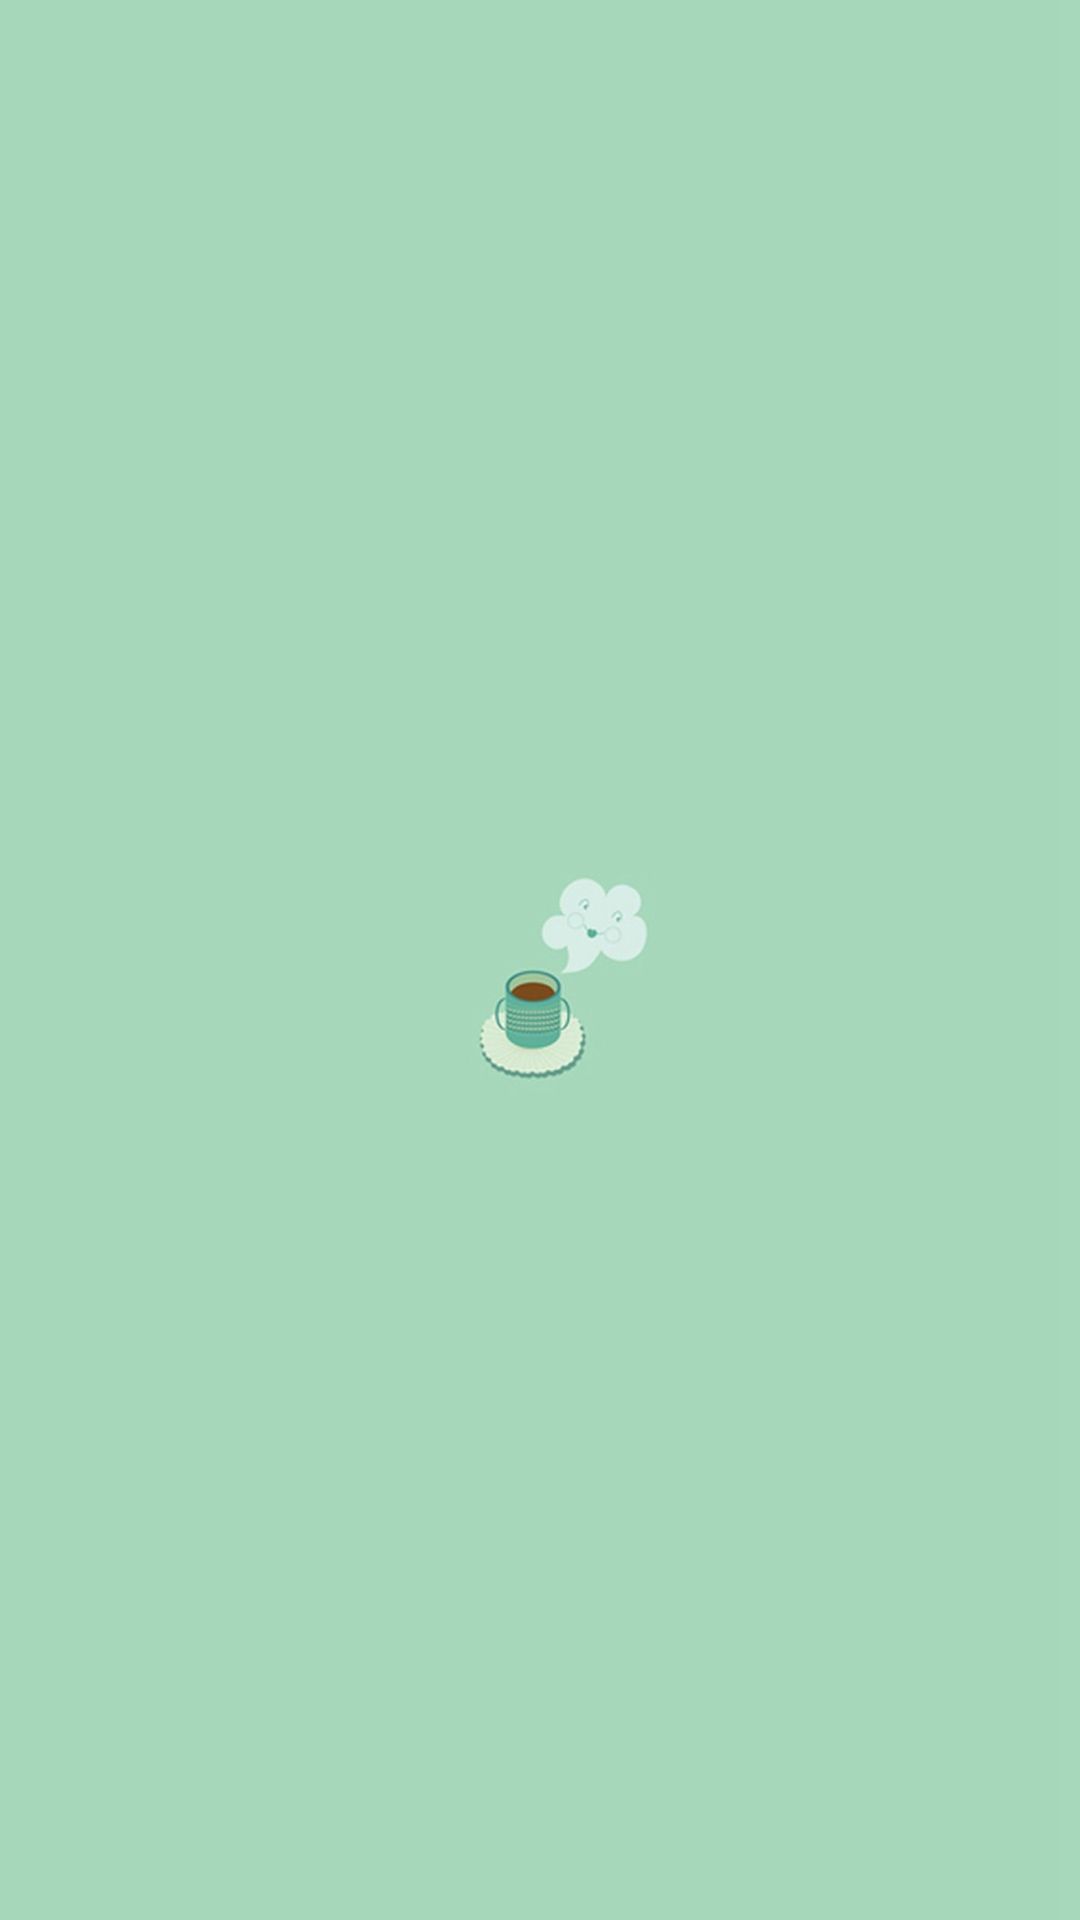 1080x1920 Simple Coffee Mug Flat Illustration Iphone 6 Wallpaper Nice